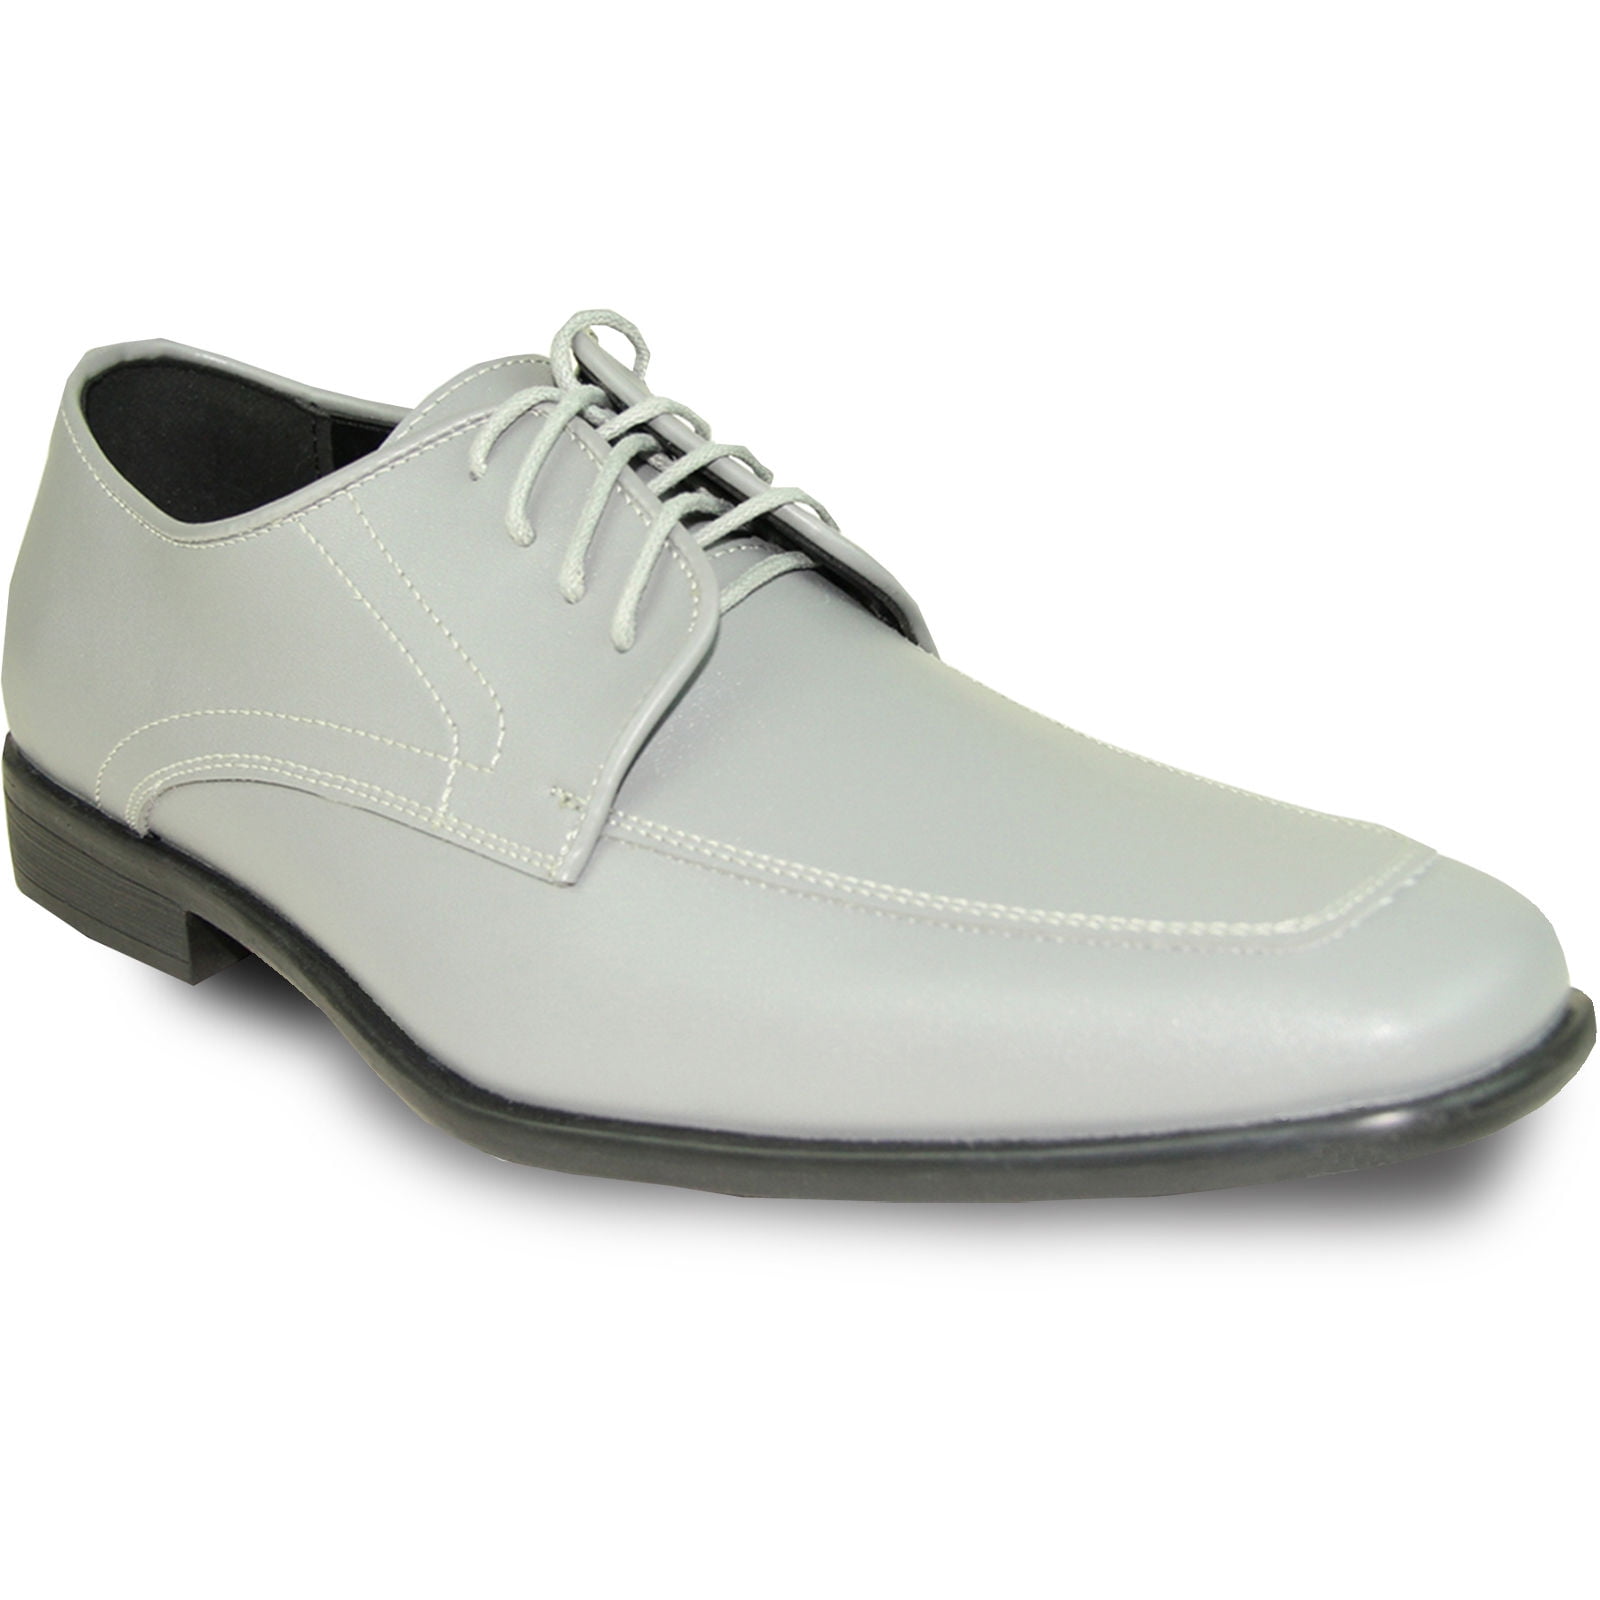 Grey Men’s Dress Shoes for Wedding